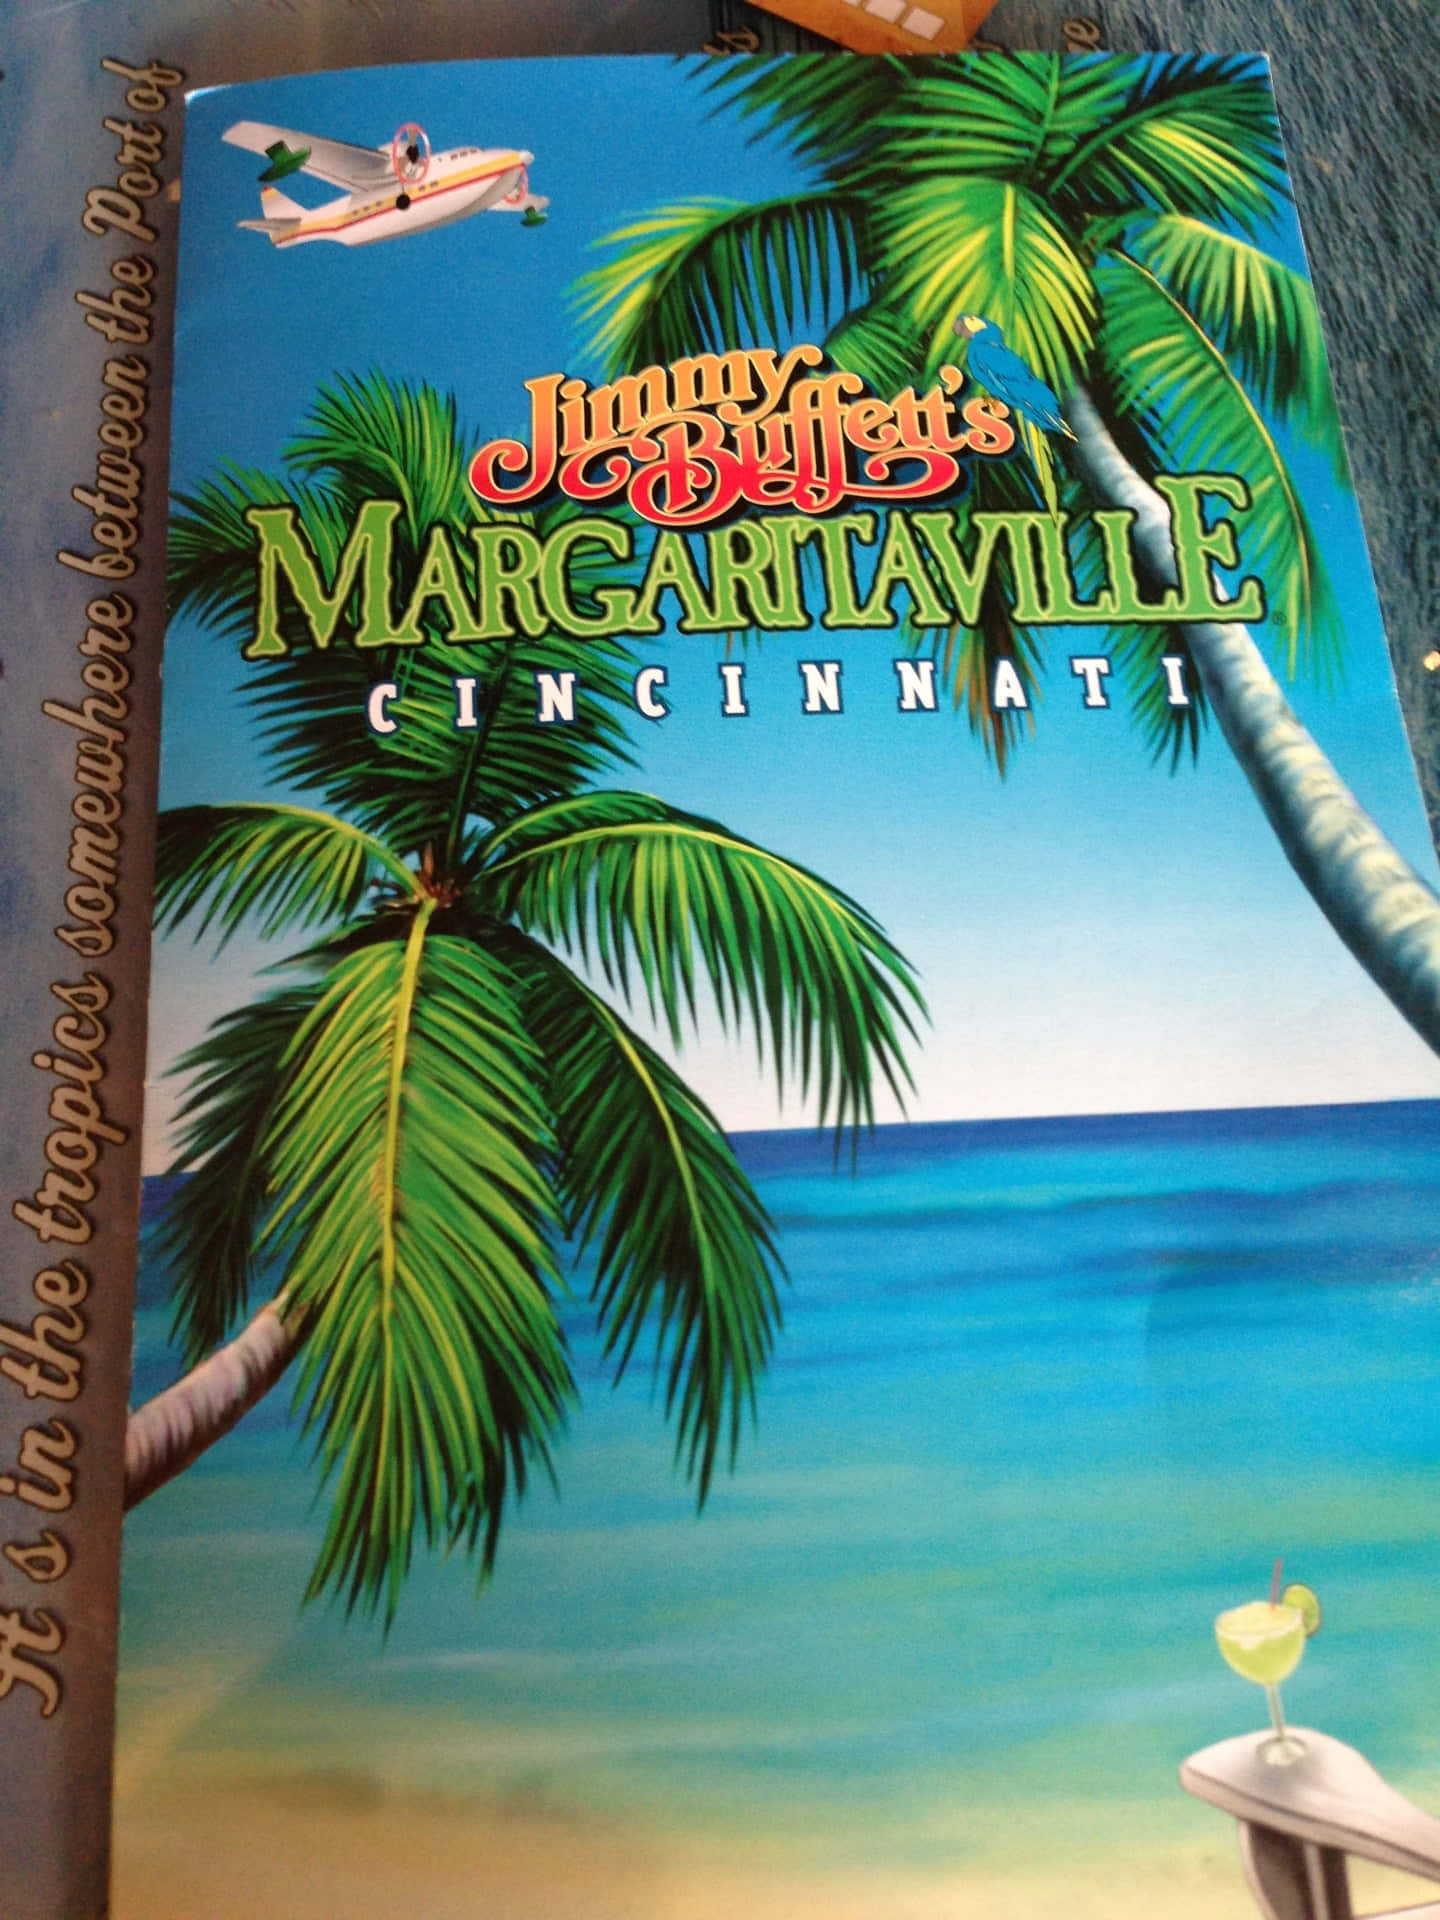 Margaritaville Themed Restaurant Menu Wallpaper